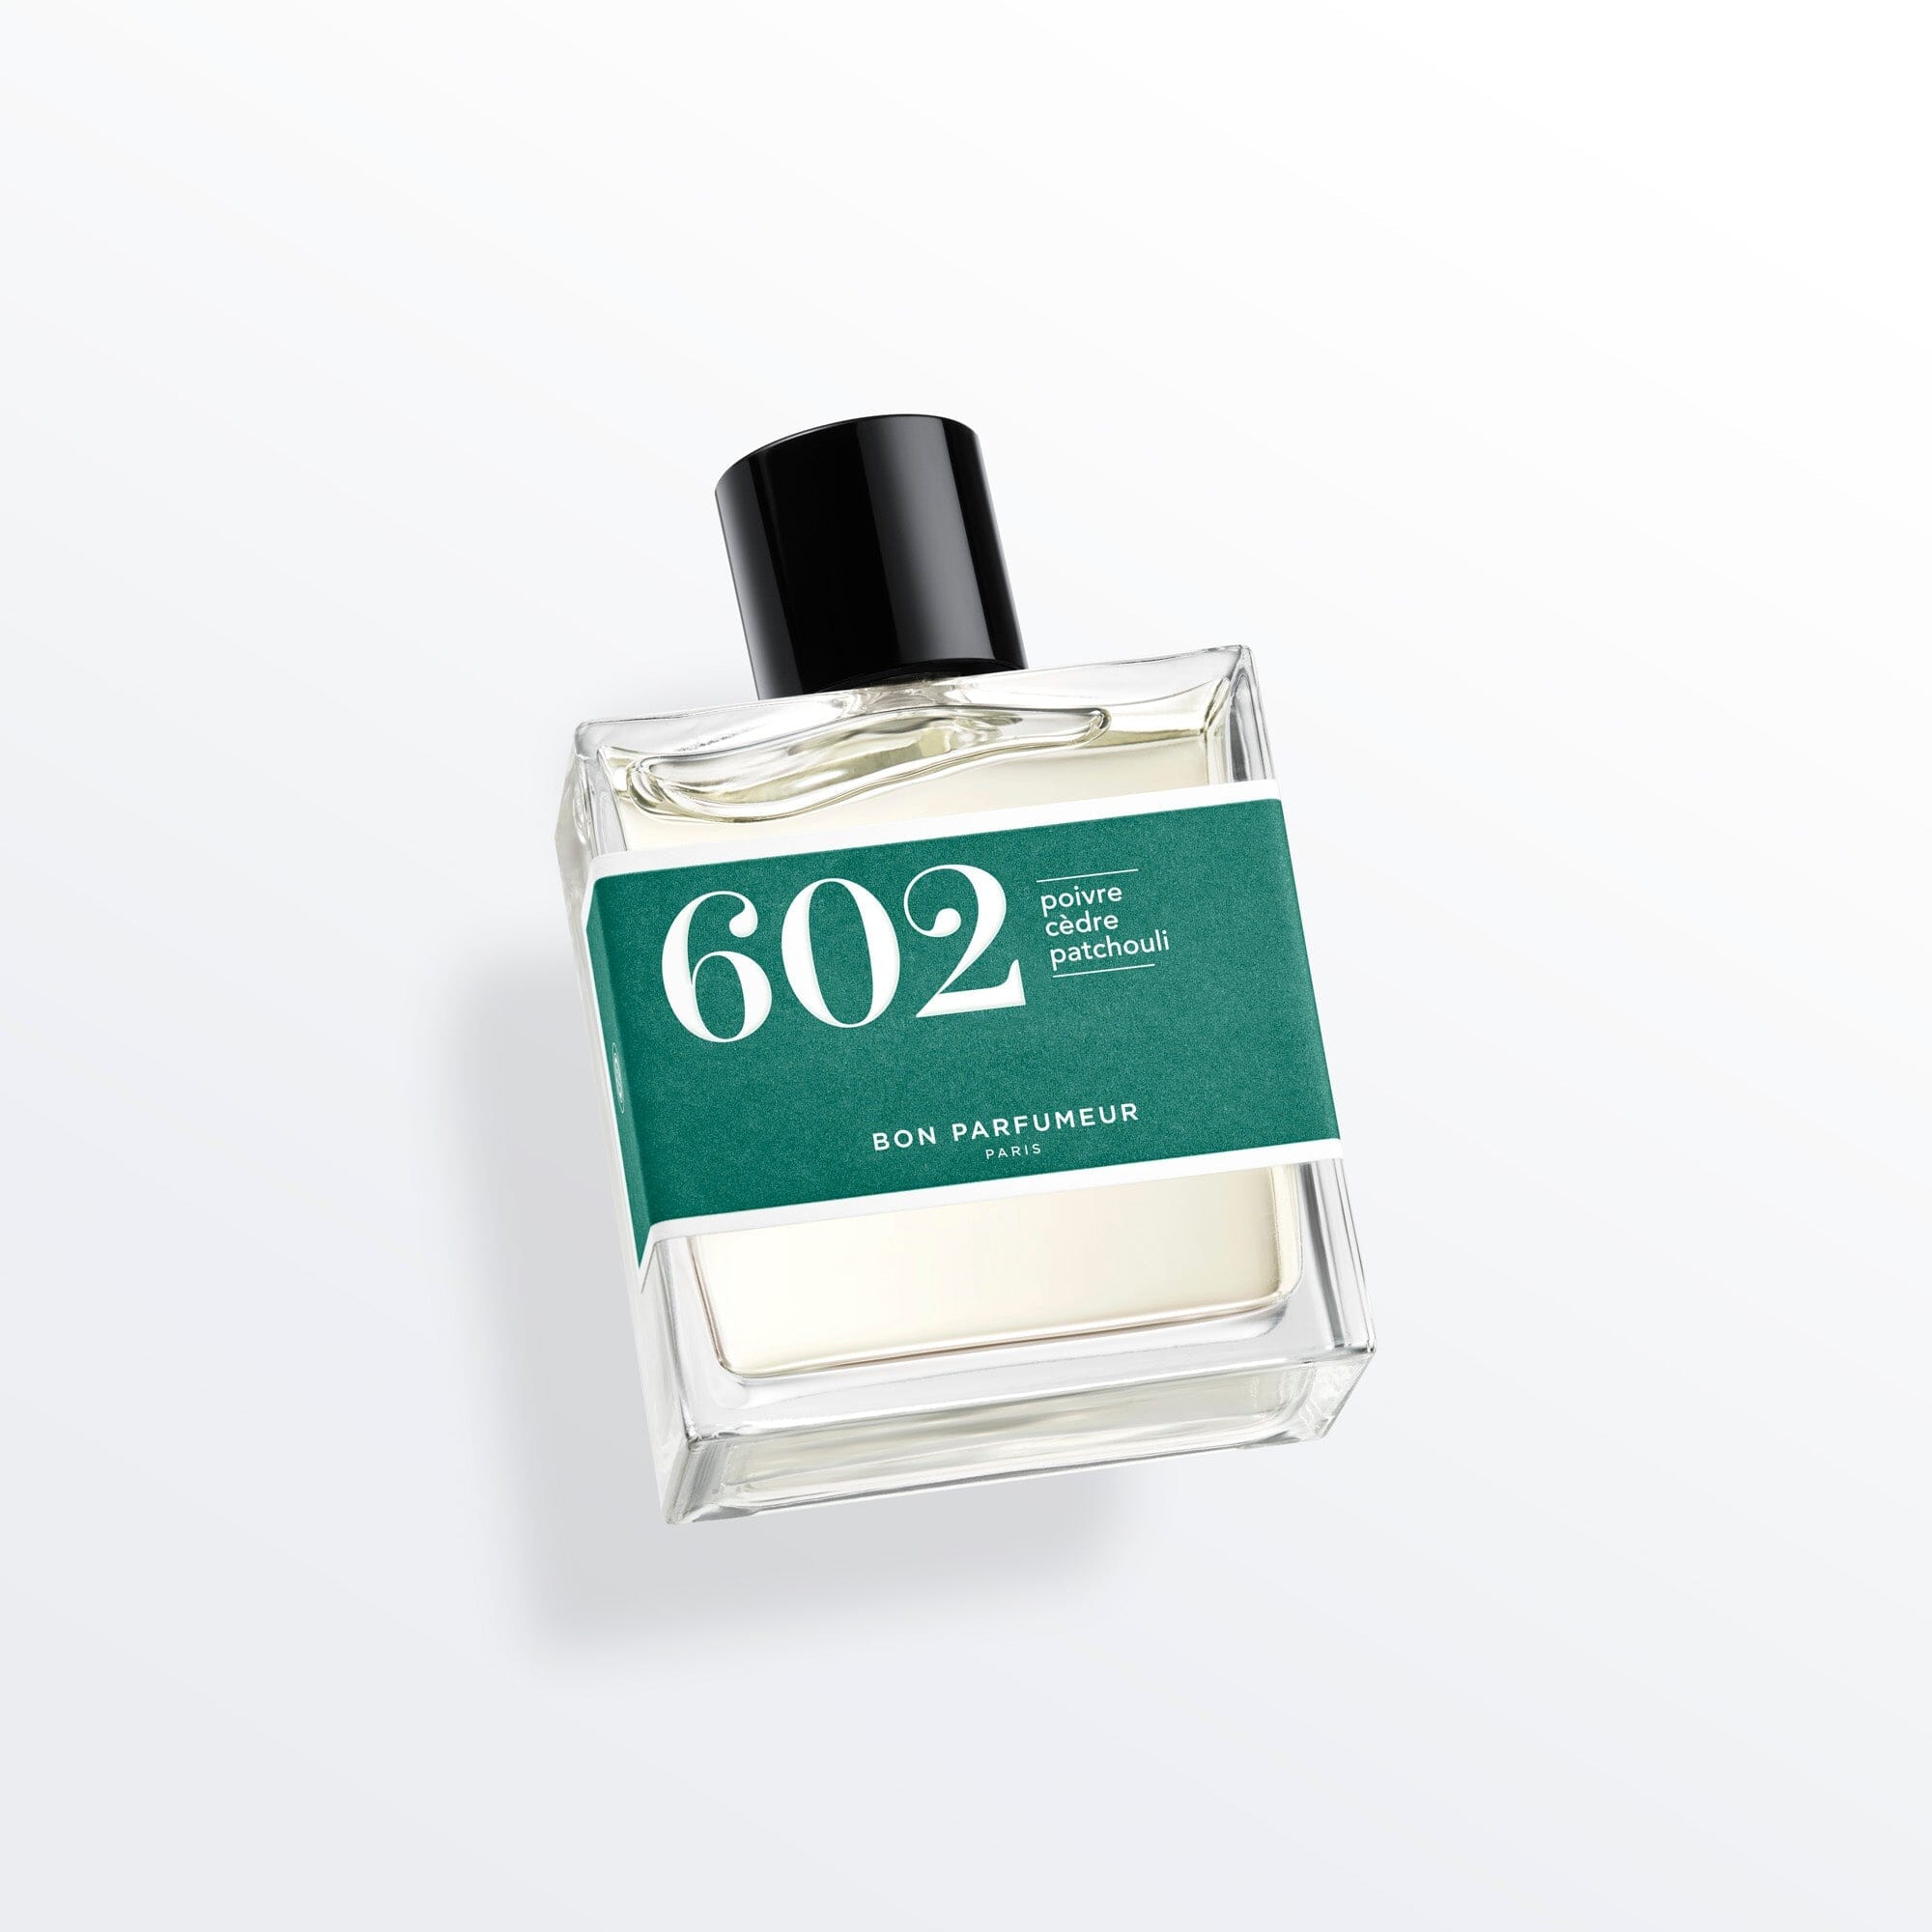 Harde ring Verhogen Ambitieus Eau de parfum 602 with pepper, cedar and patchouli – Bon Parfumeur